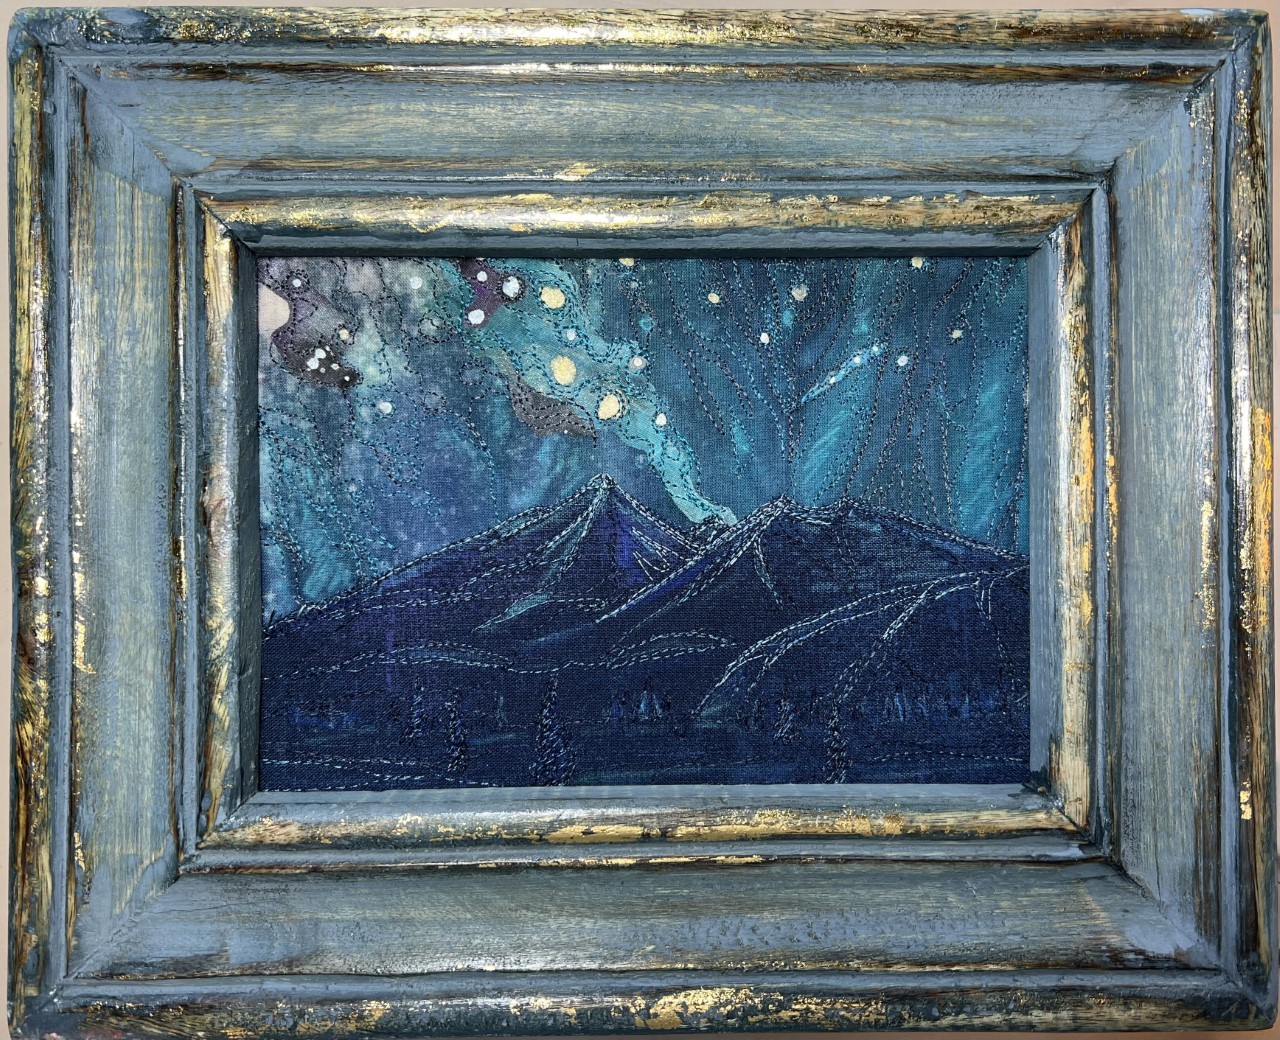 Milky Way over the San Francisco Peaks – Arline Martens, The Artist's Gallery